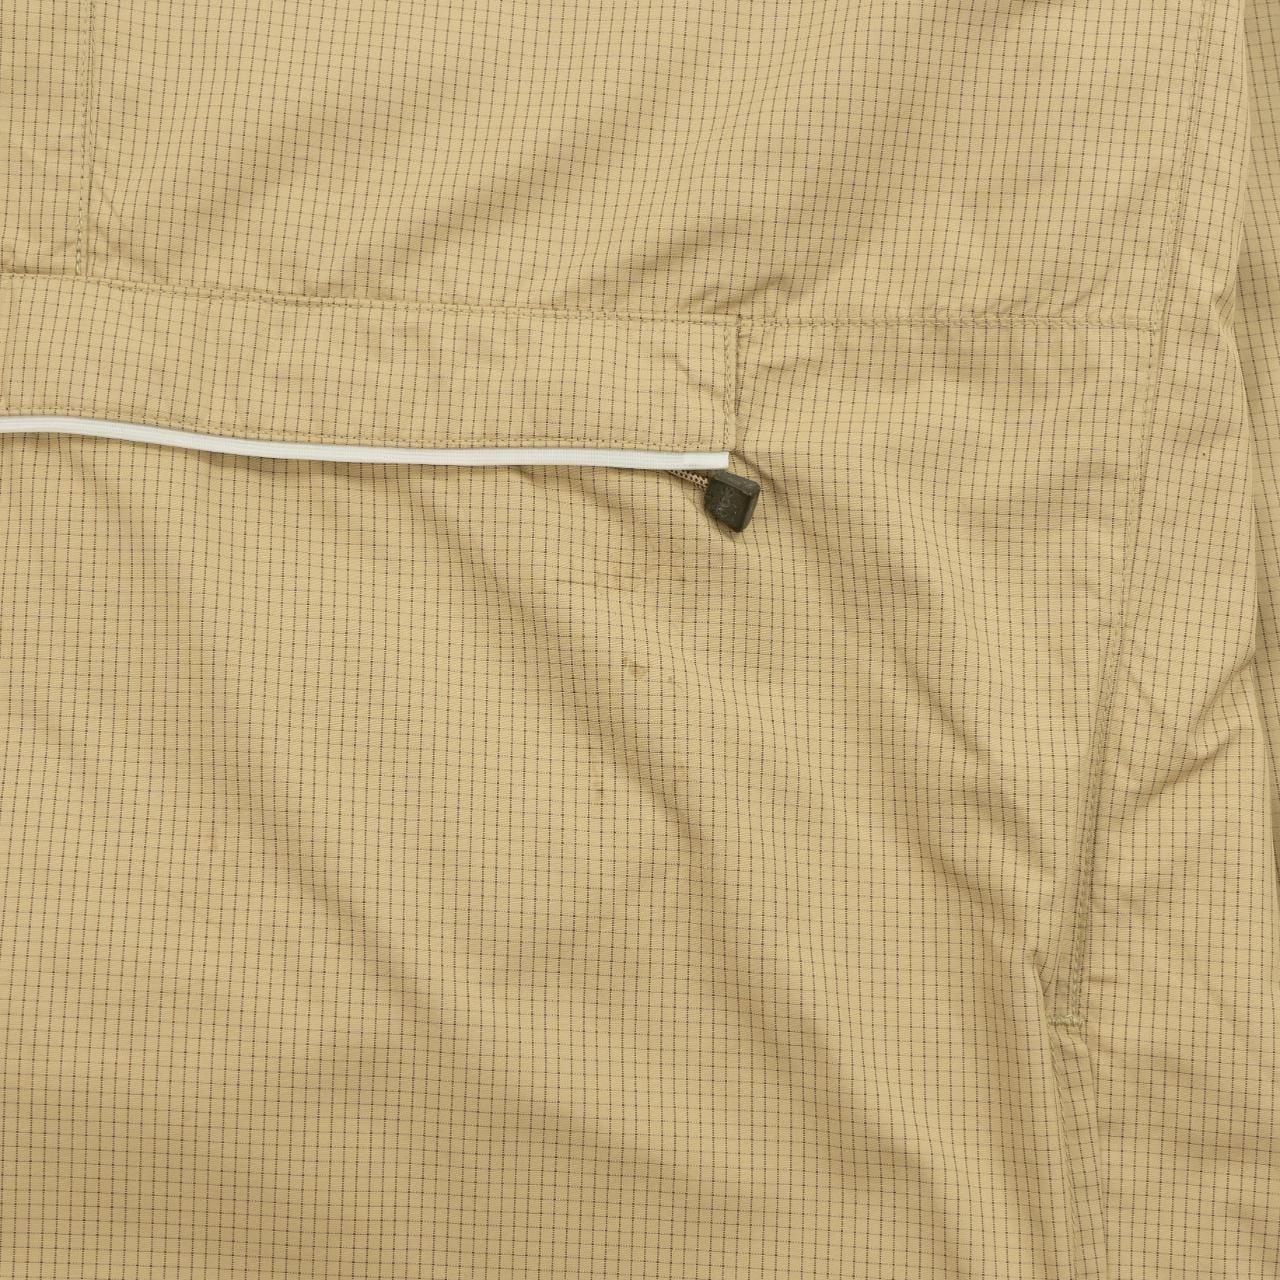 Vintage Nike ACG Quater Zip Jacket Size L - Known Source